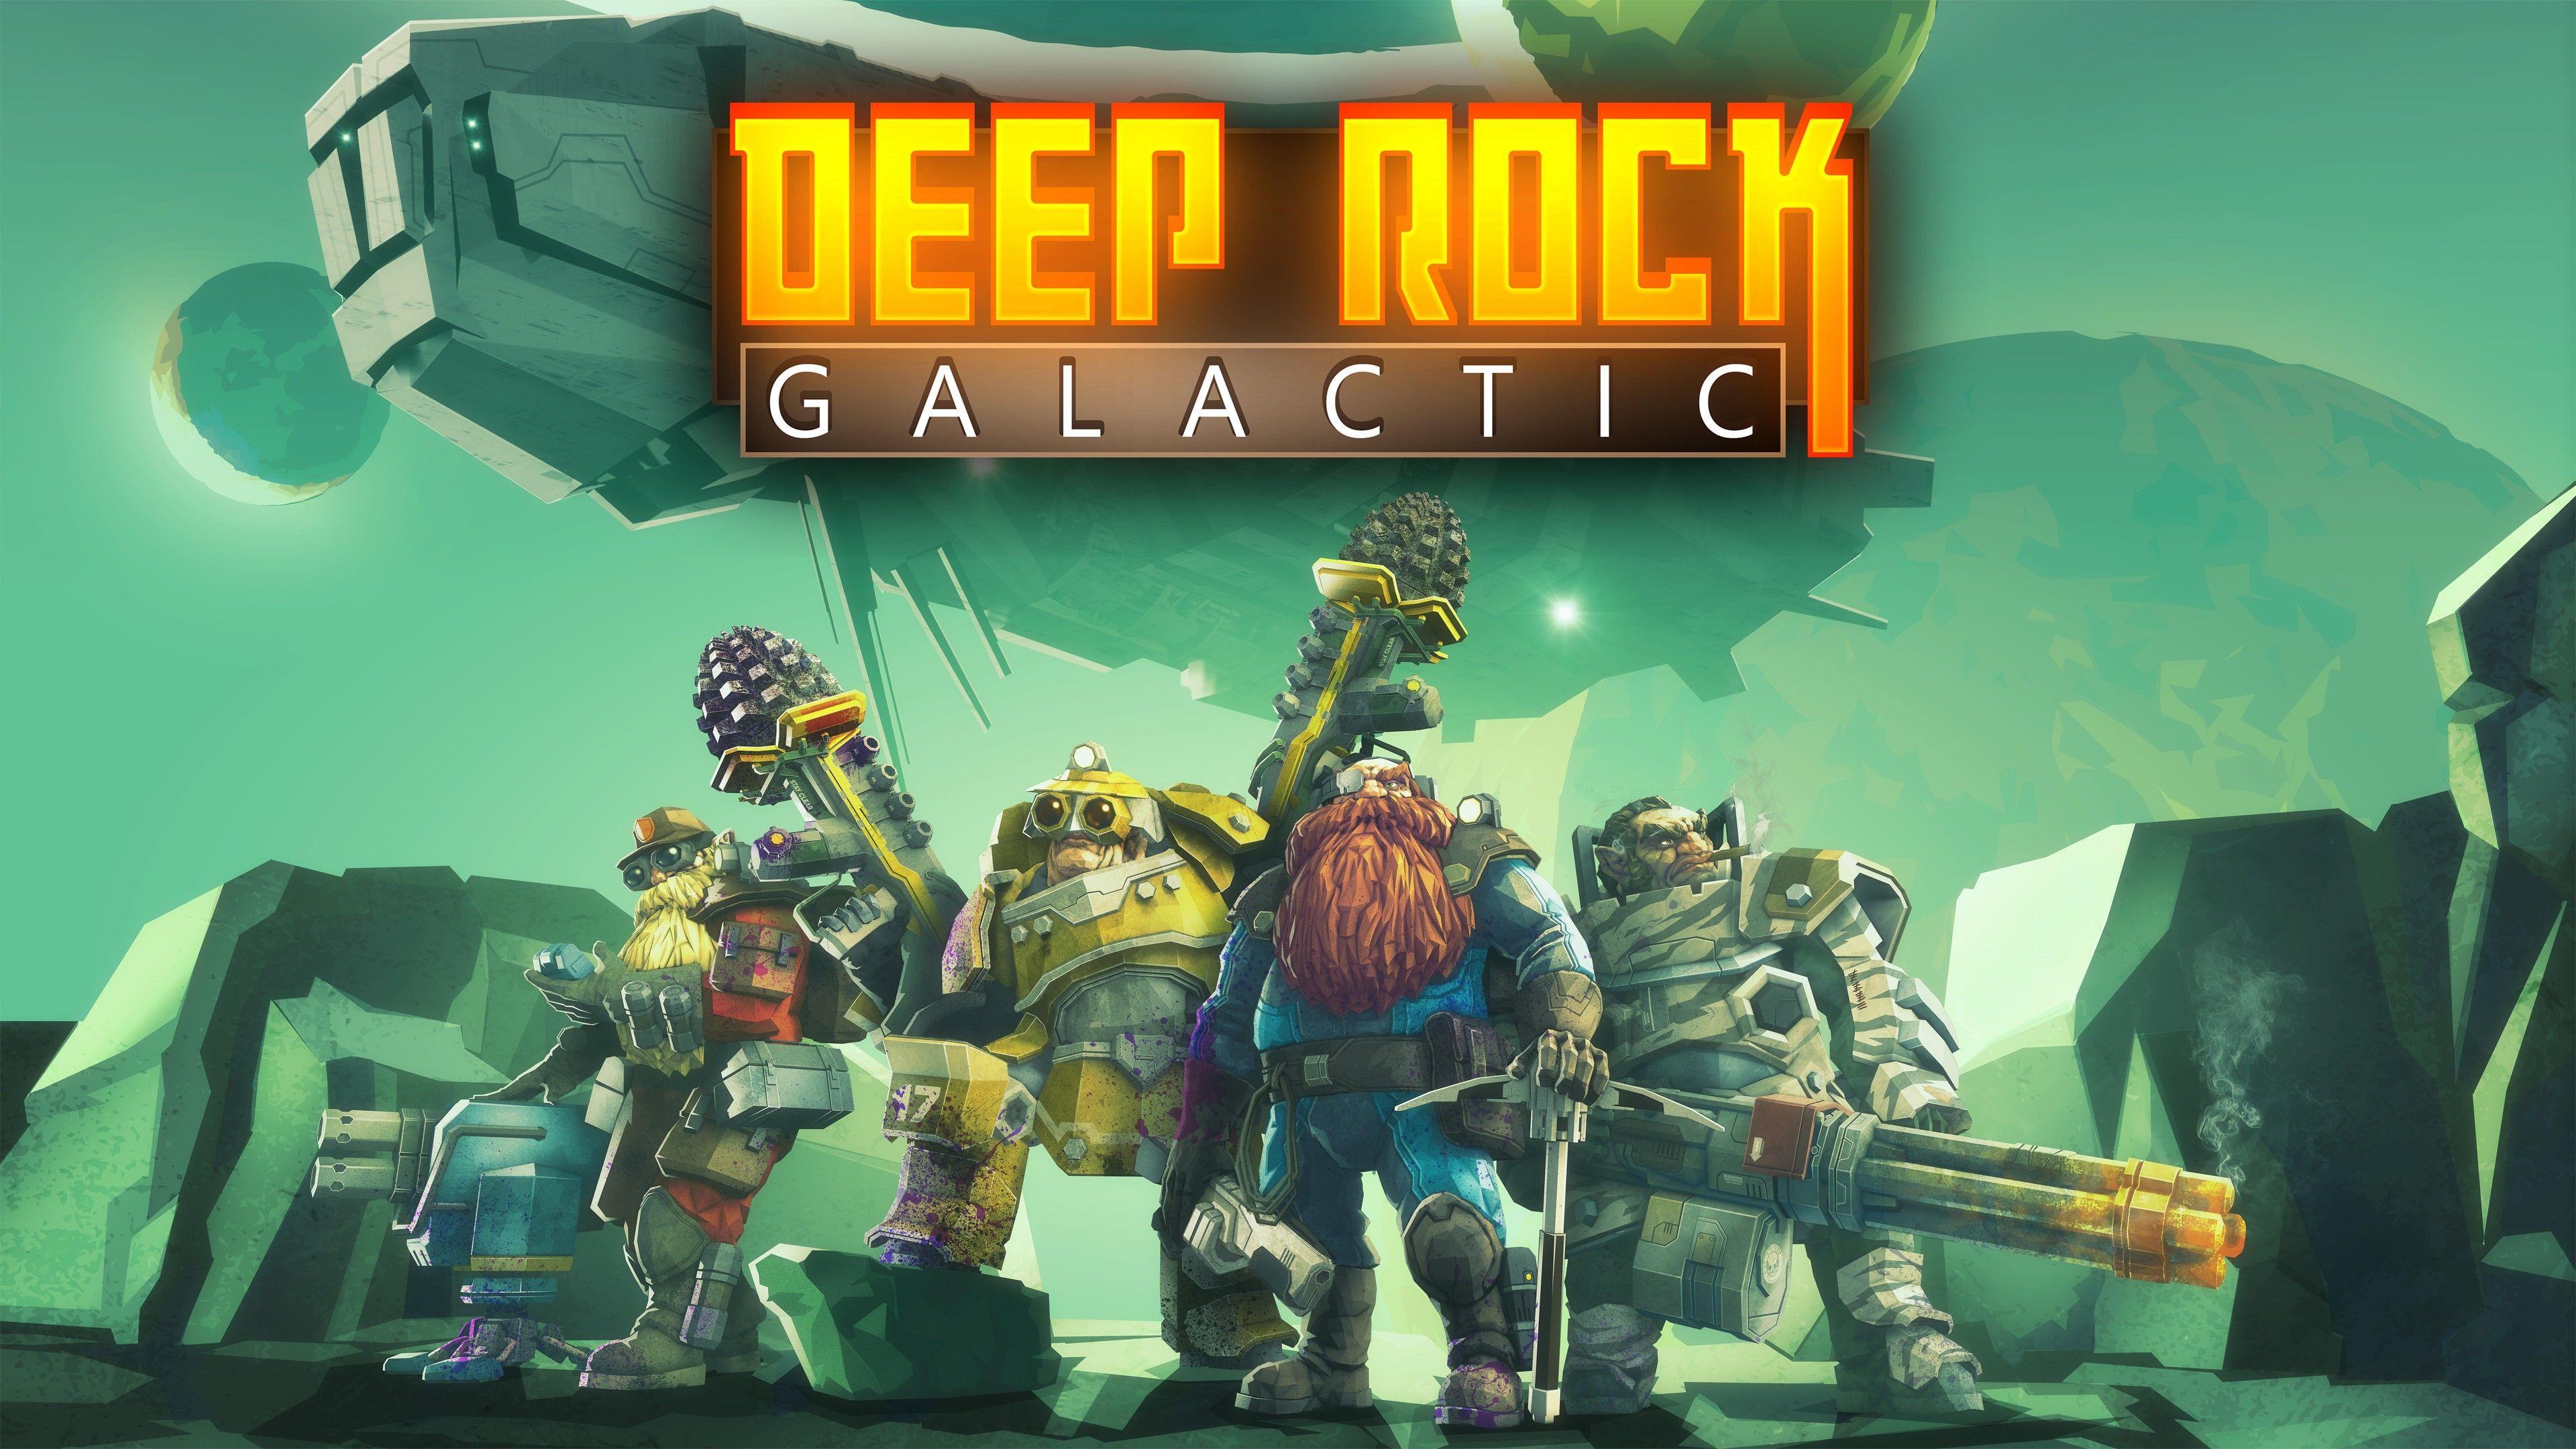 download free deep rock galactic discord